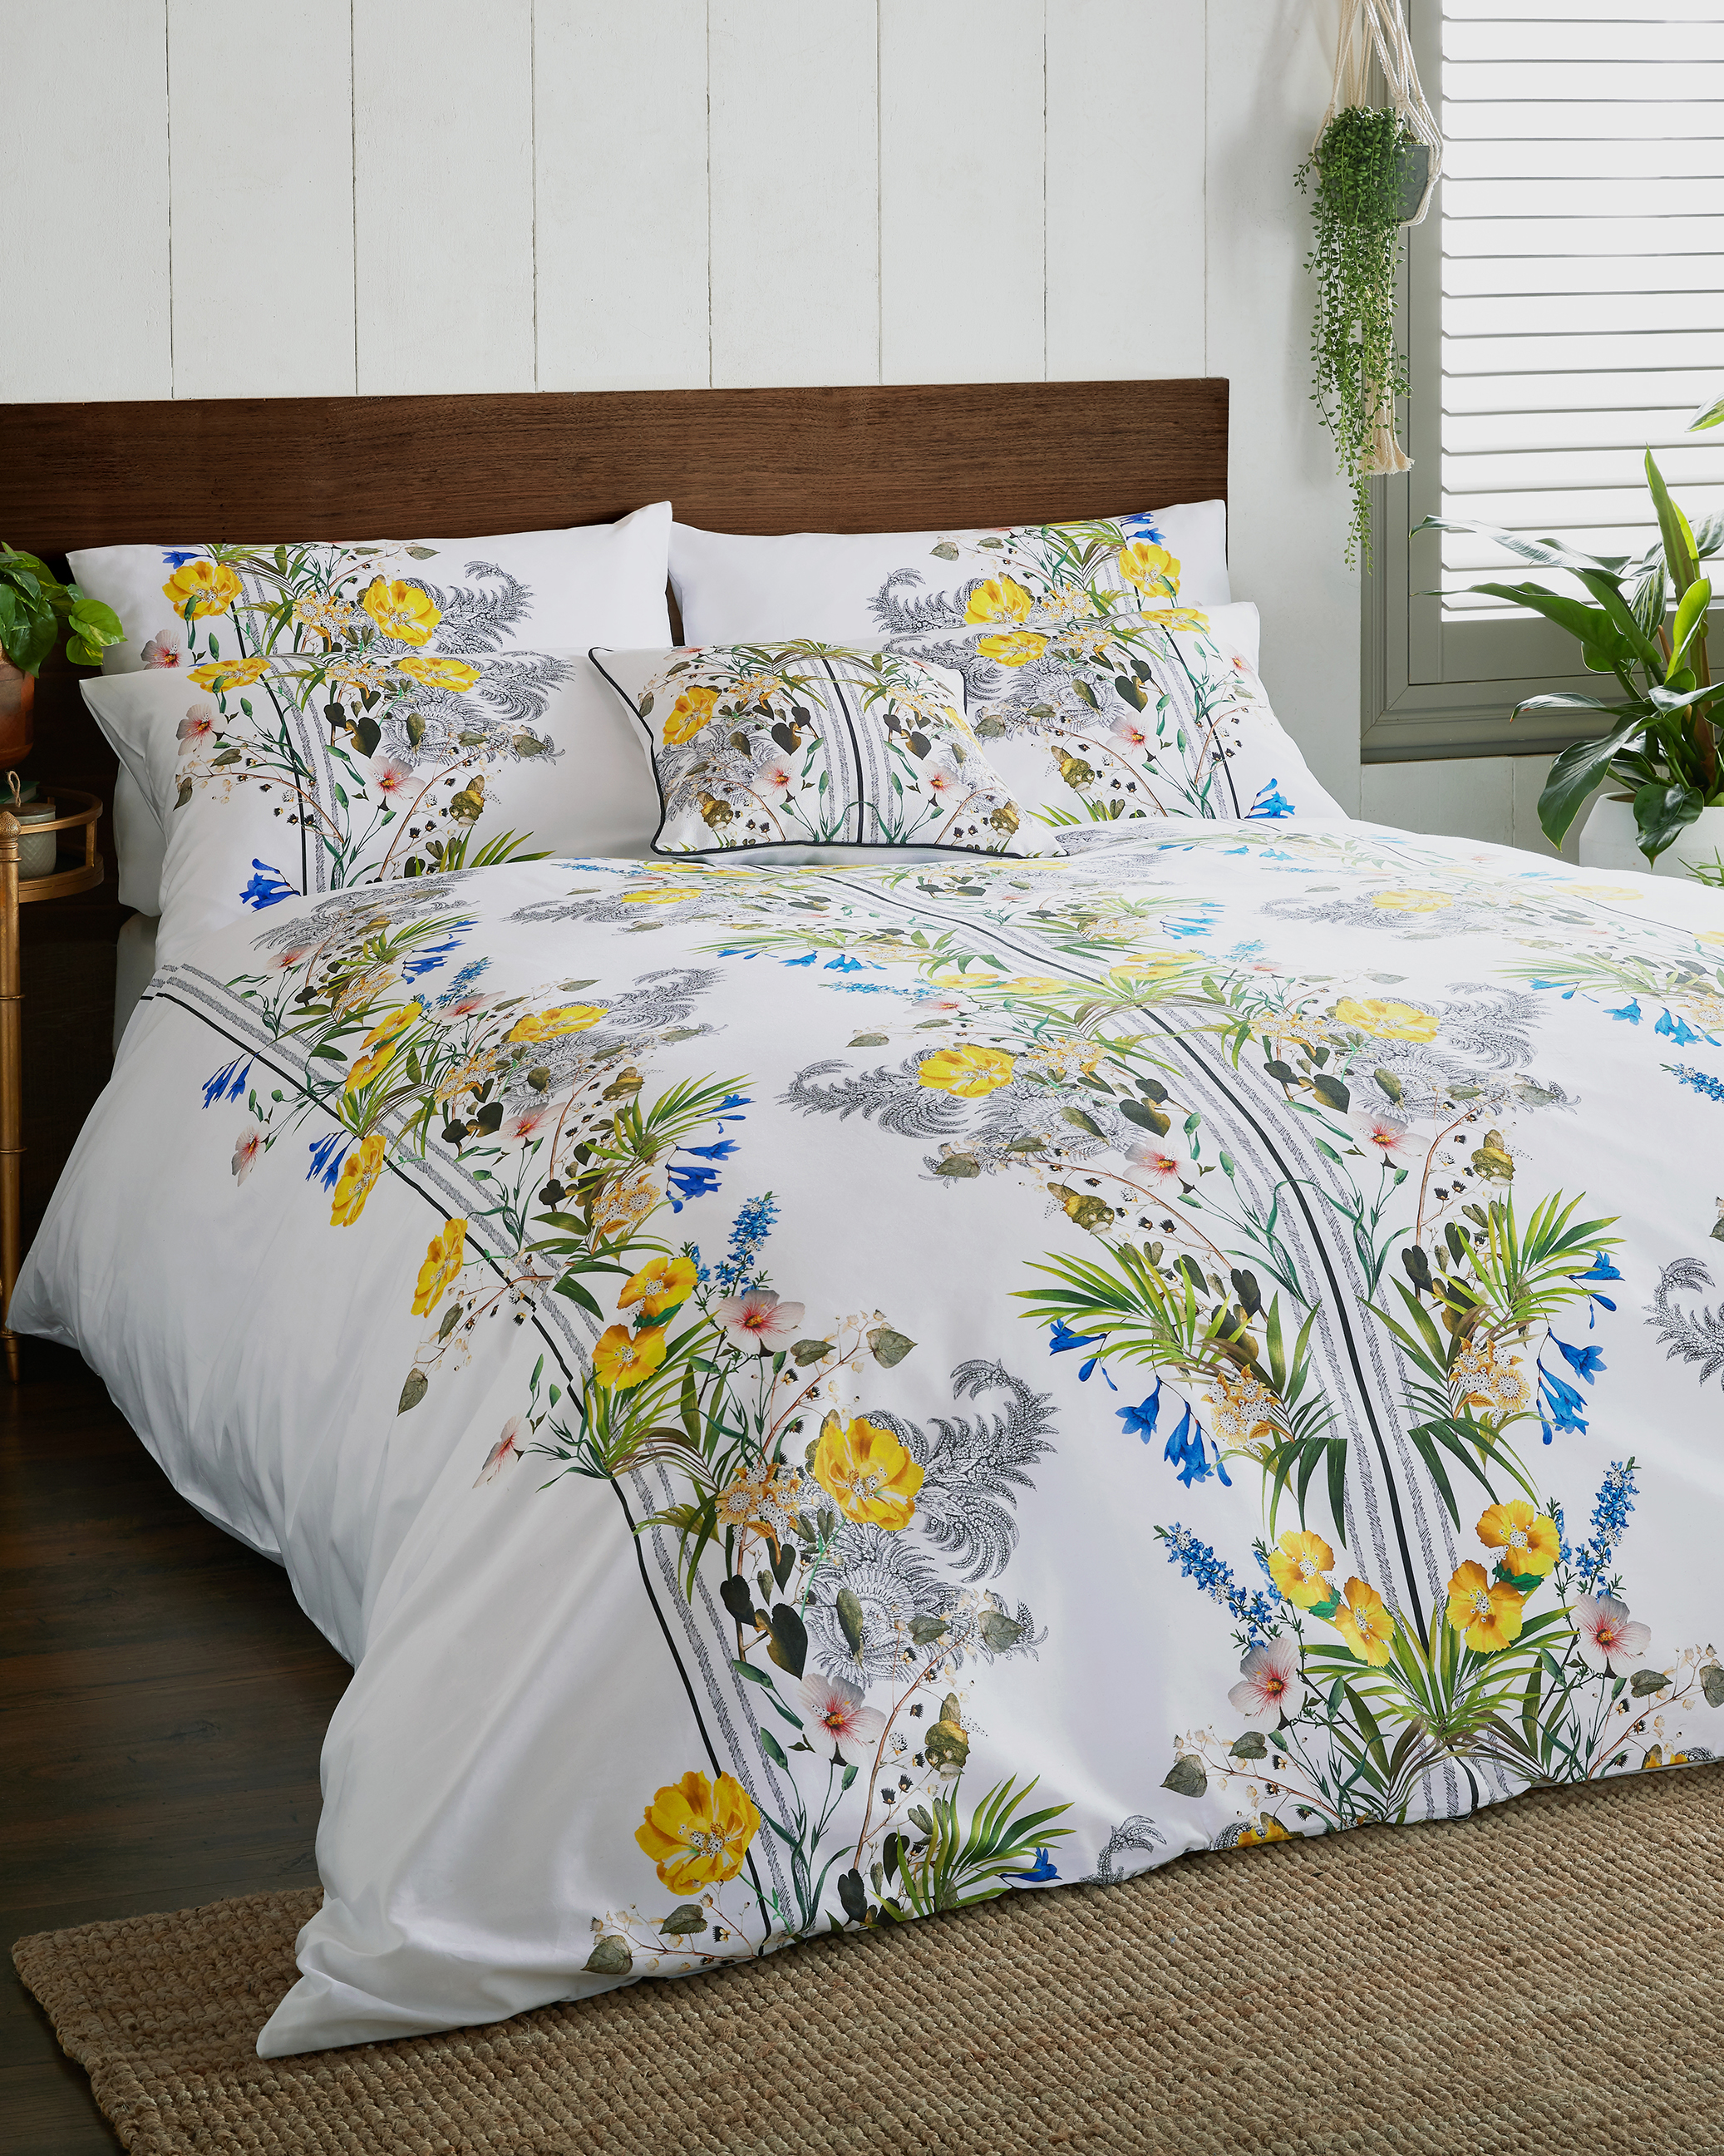 Royal Palm King Size Duvet Cover White Bed Linen Ted Baker Row